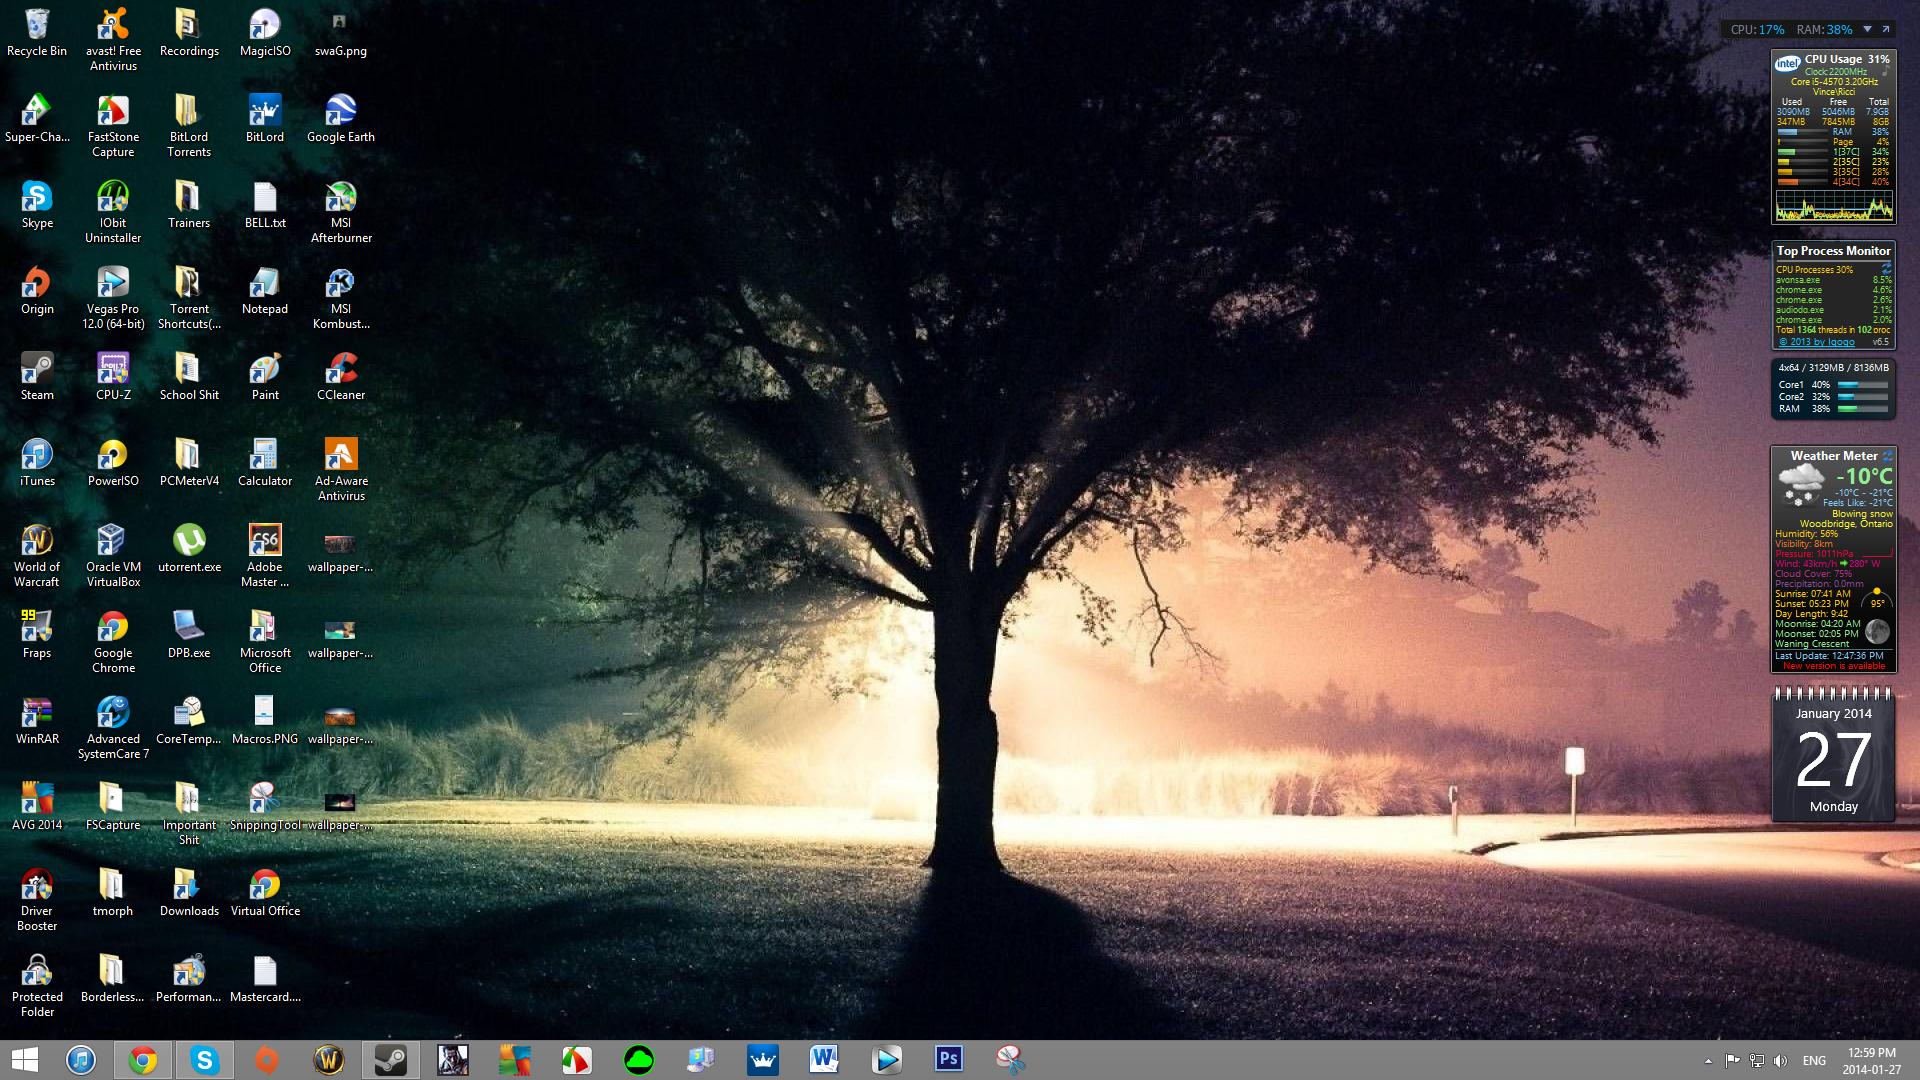 This is what it looks like on my desktop   httpiimgurcomI7StMJM